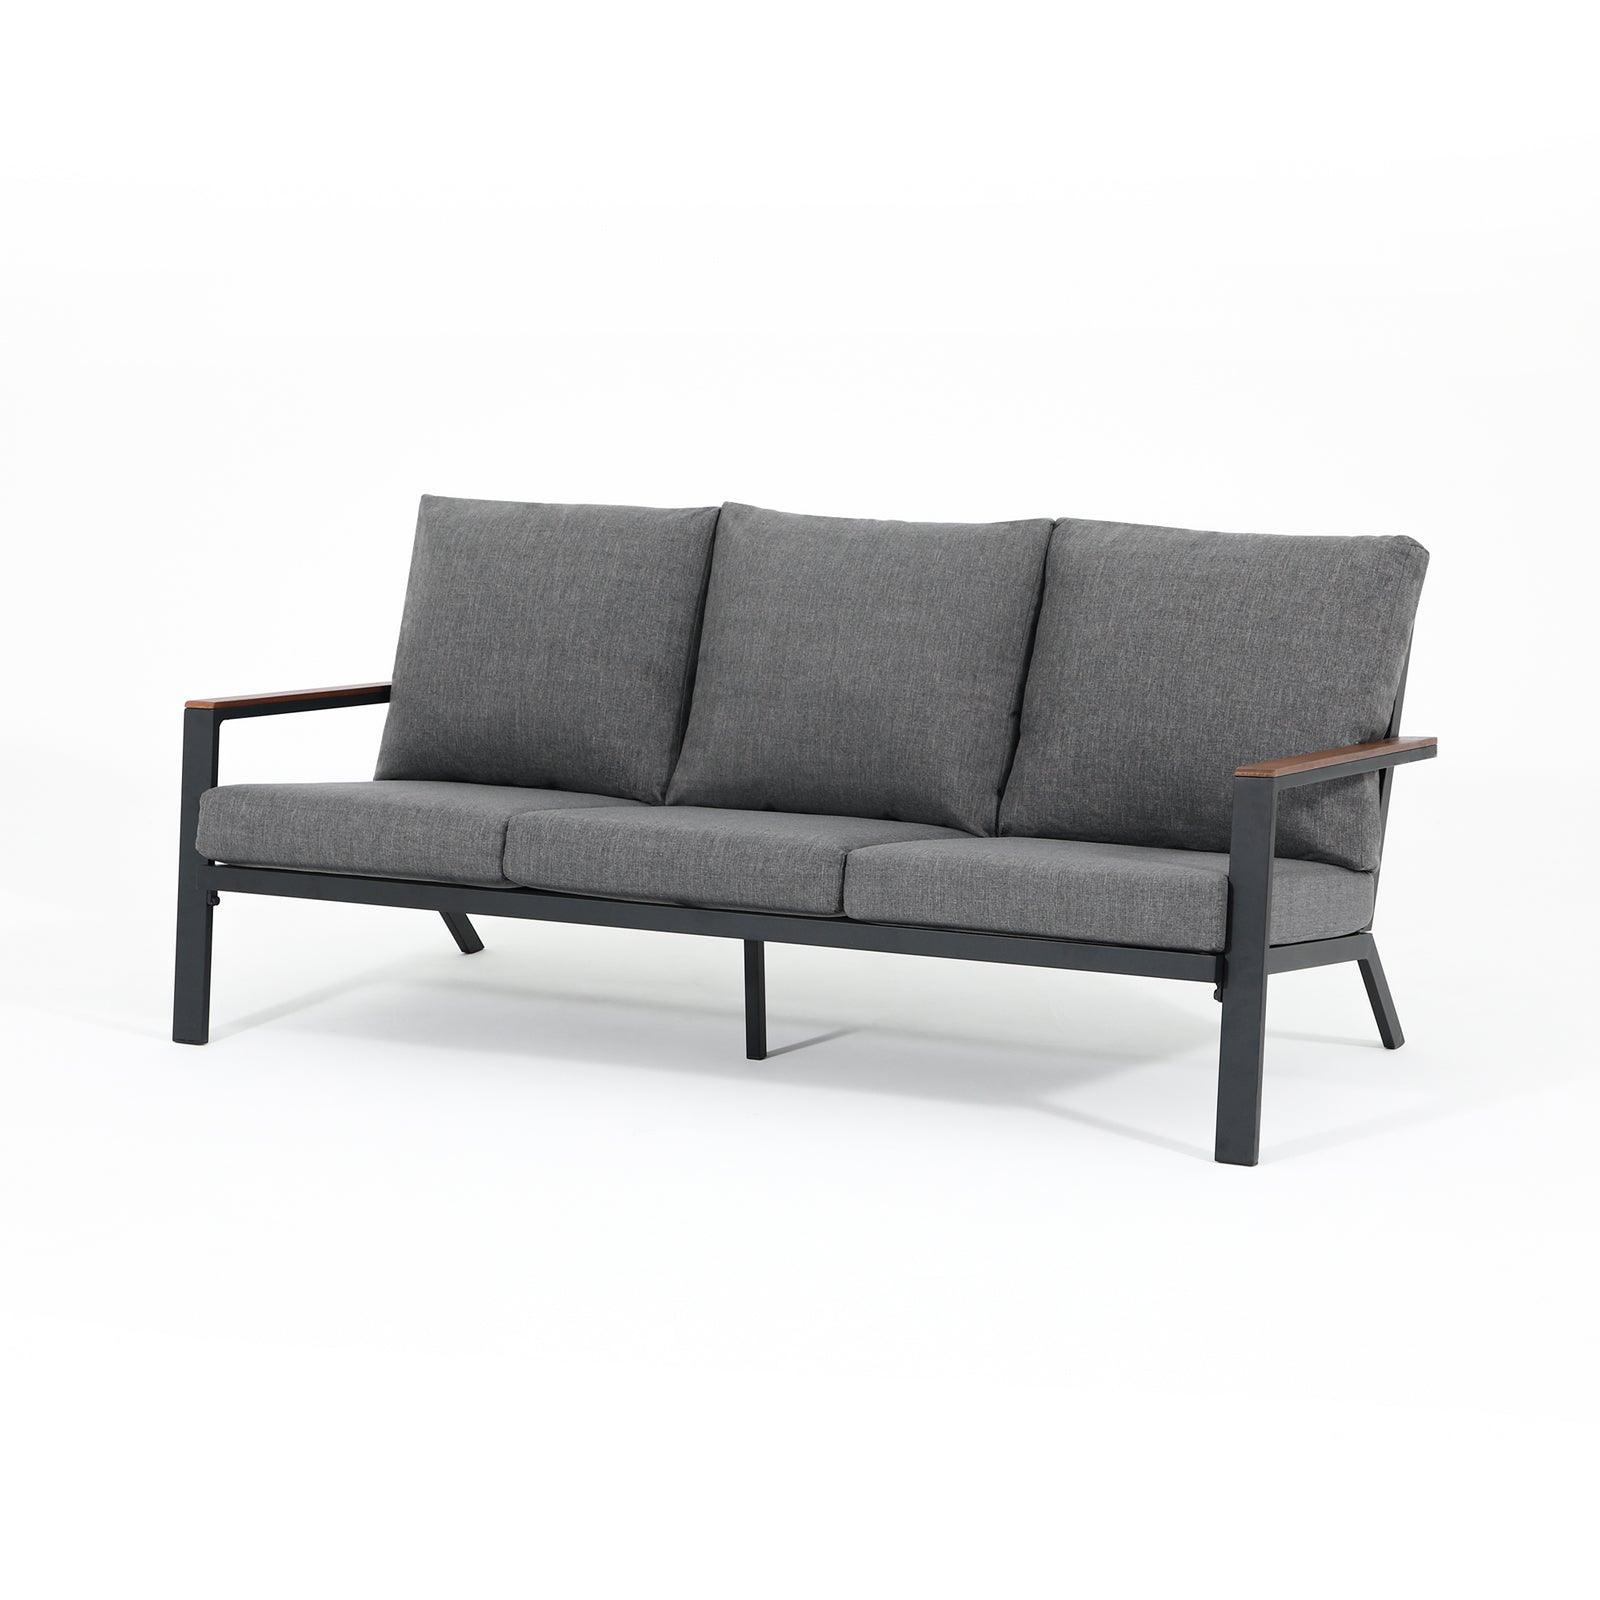 Ronda Modern Grey Frame Outdoor Furniture, modern outdoor sofa with wood design, grey cushions, wood finish armrest, Left View- Jardina Furniture